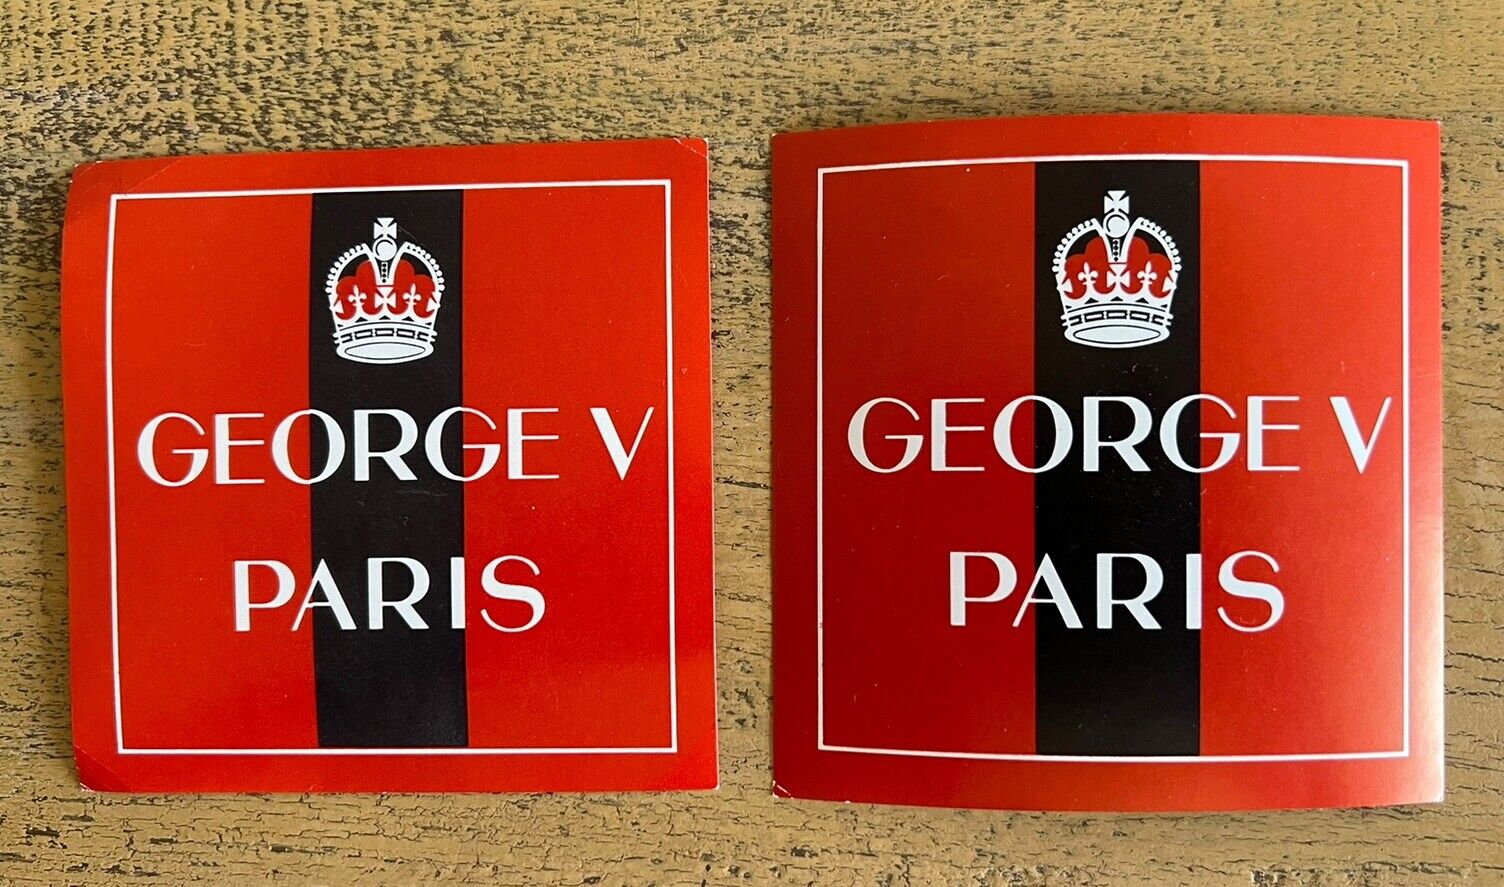 George V Paris Luggage Labels Lot Of 2 Vintage Red